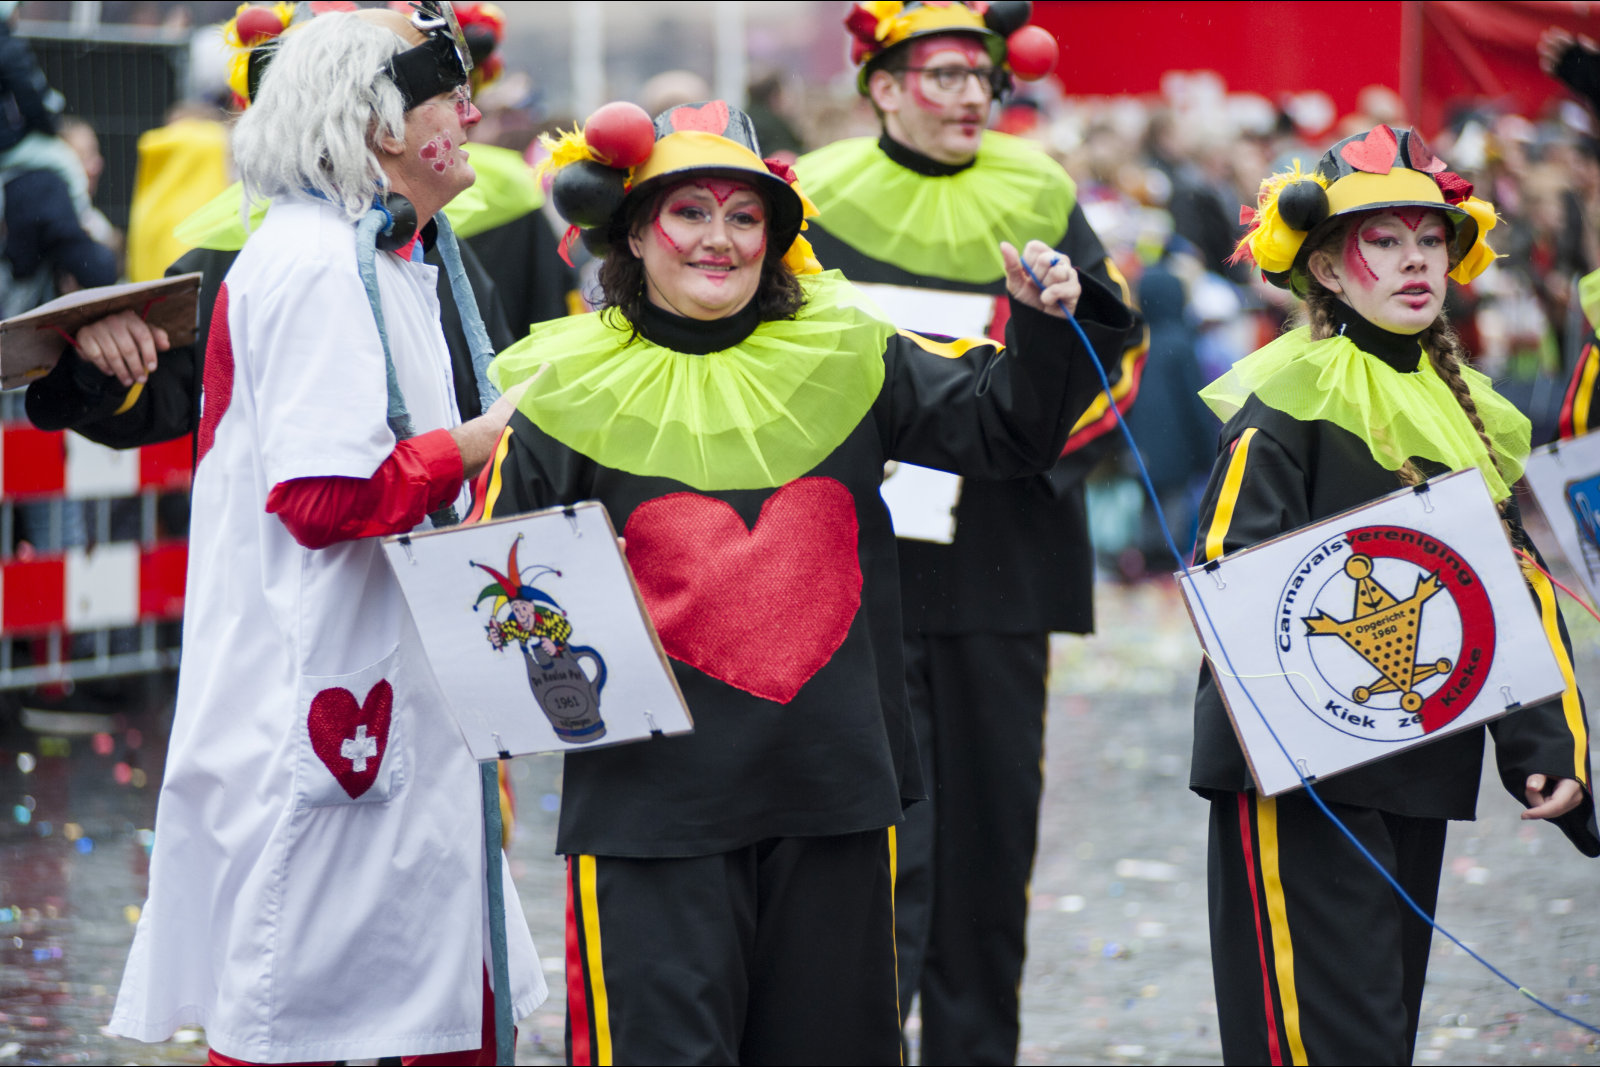 Carnavalsoptocht Nijmegen 2019